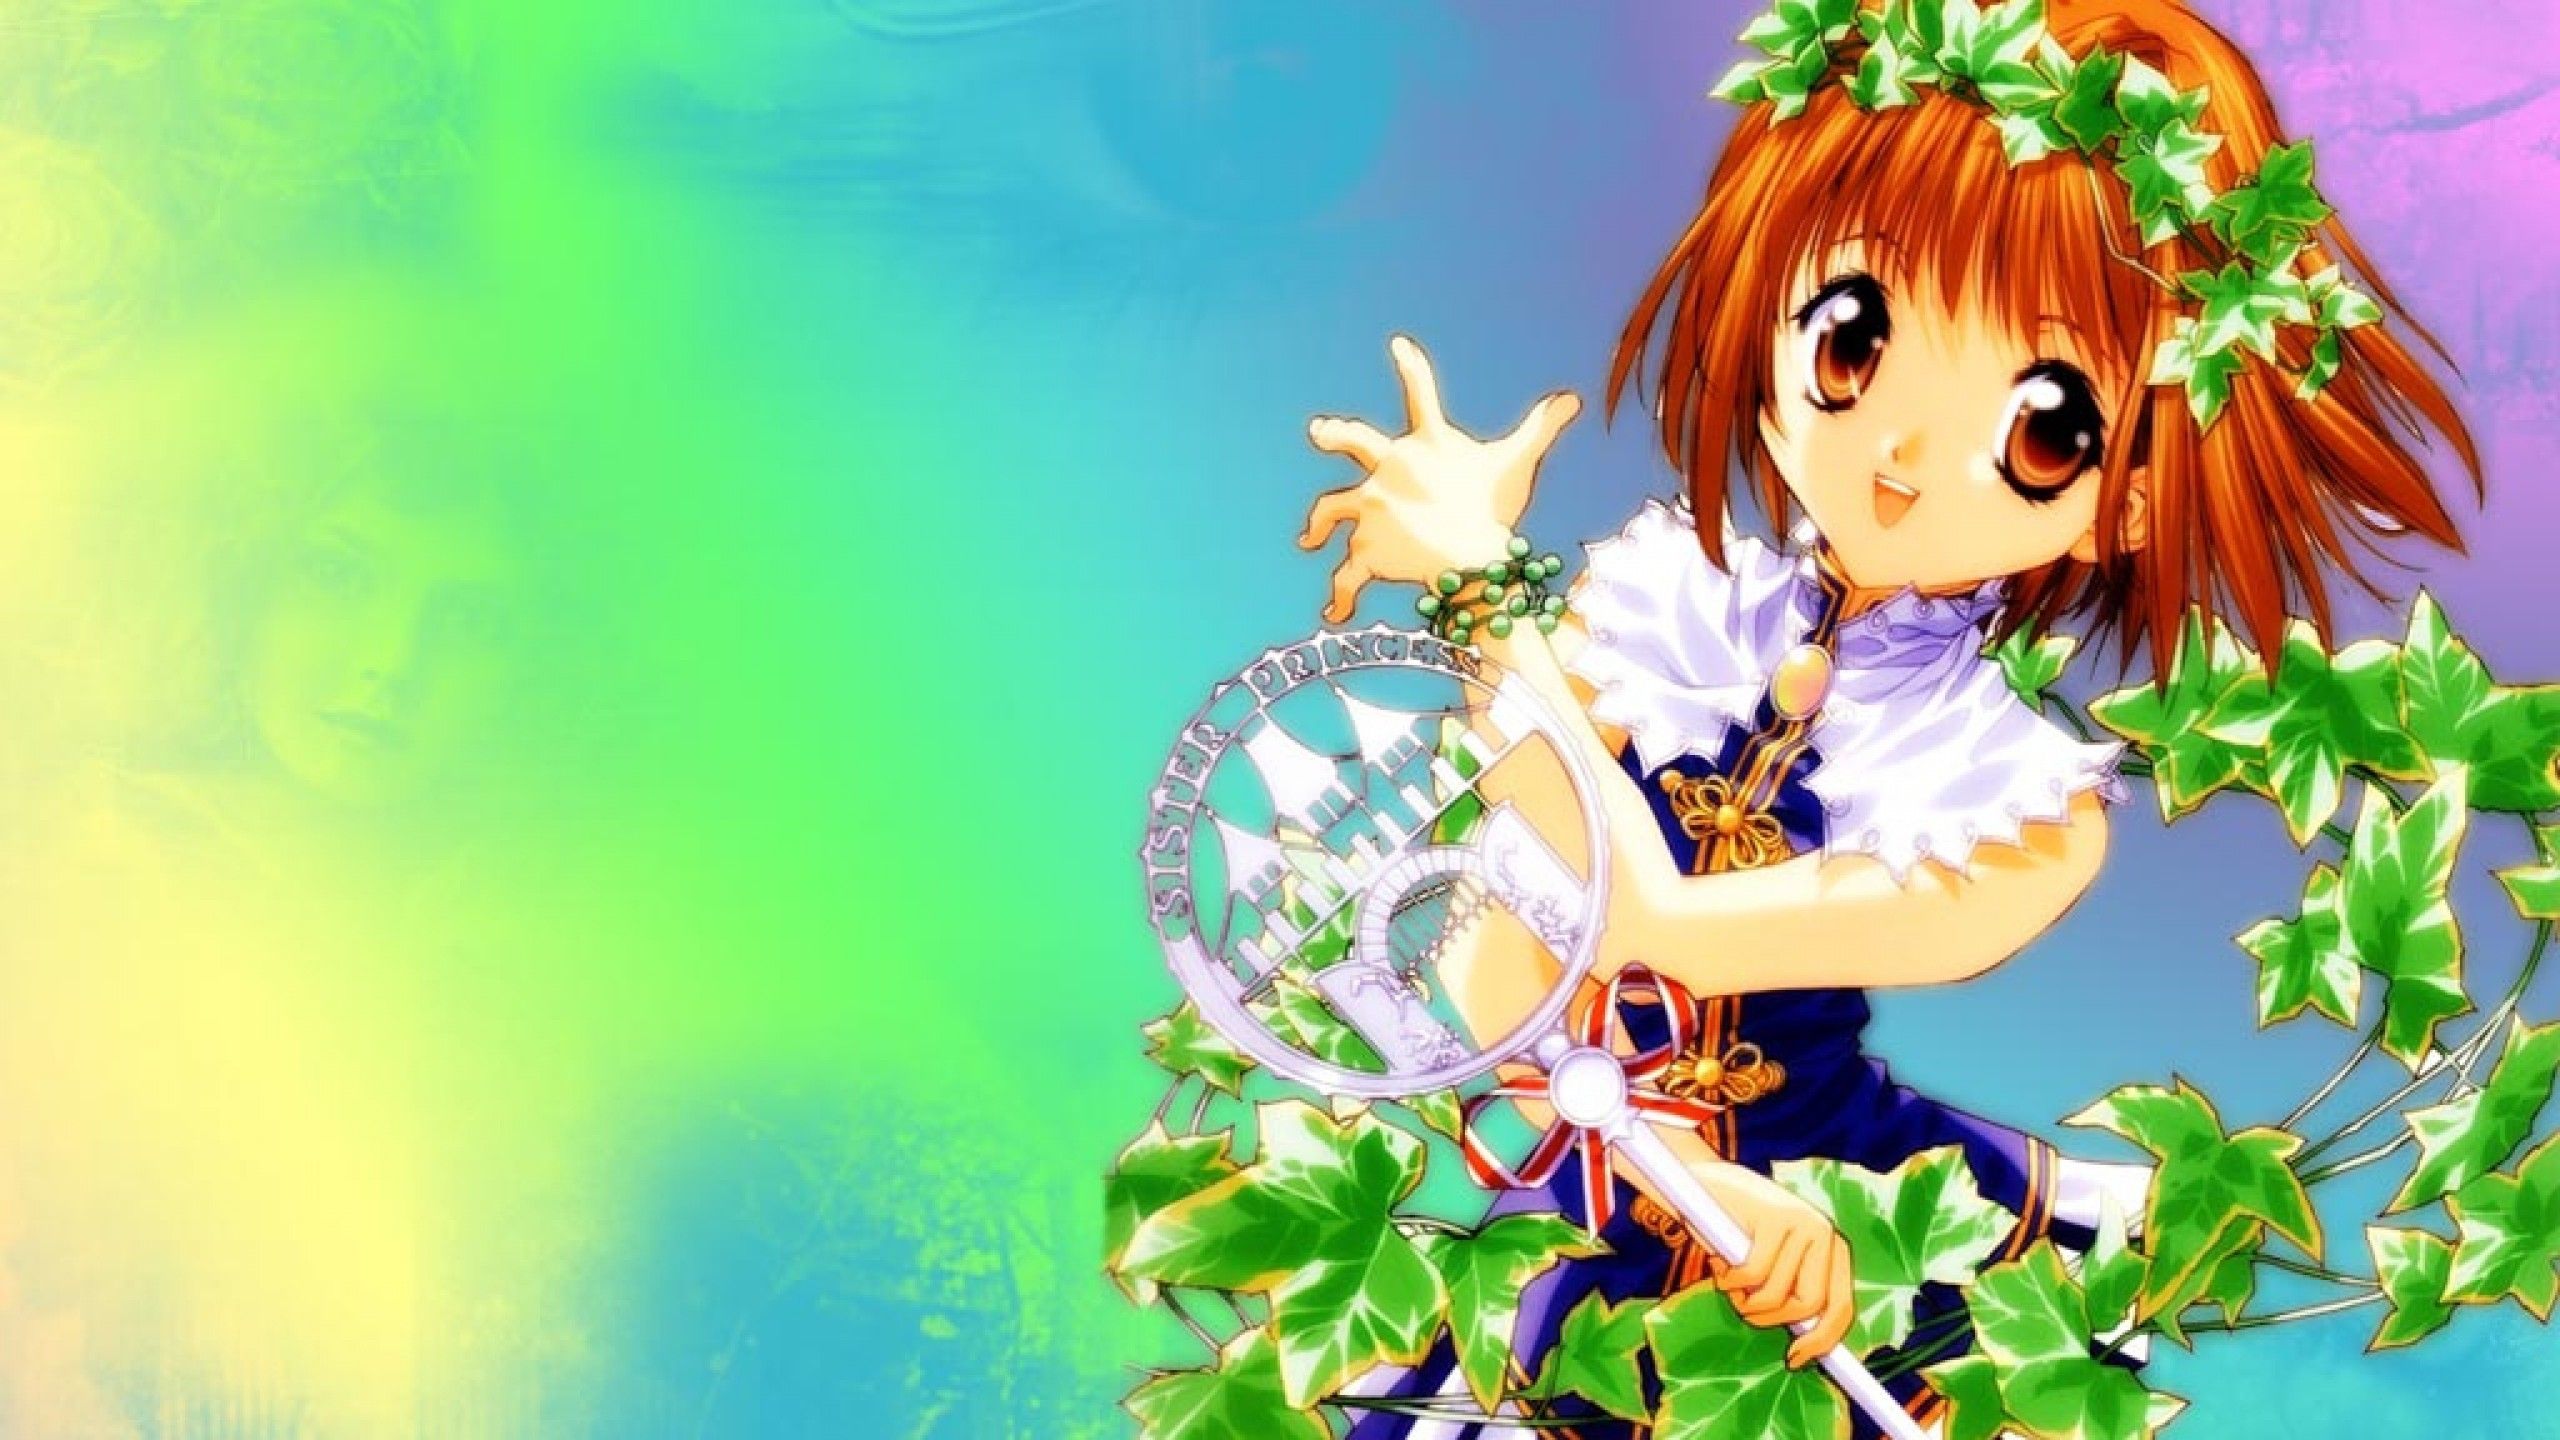 Anime girl with magical powers